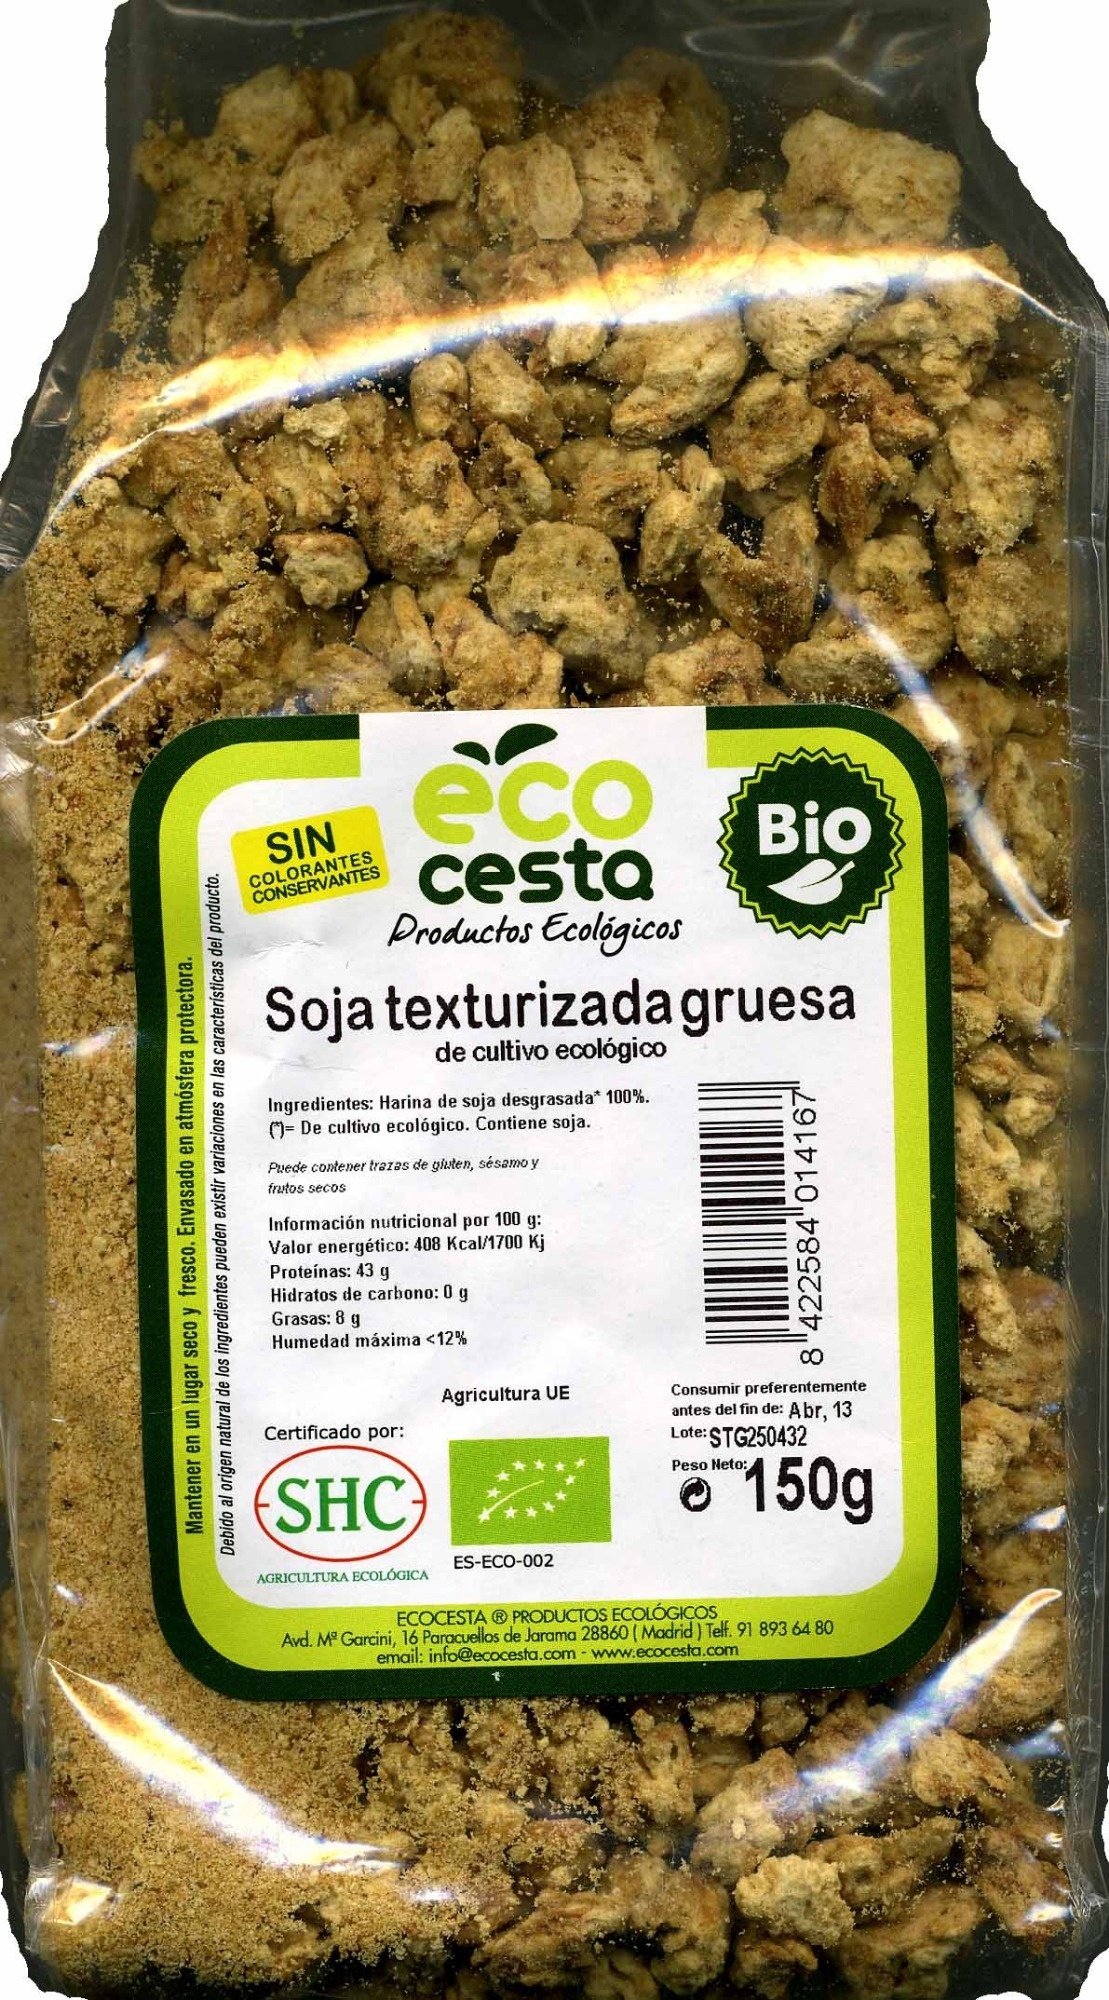 Soja texturizada Gruesa - Product - es